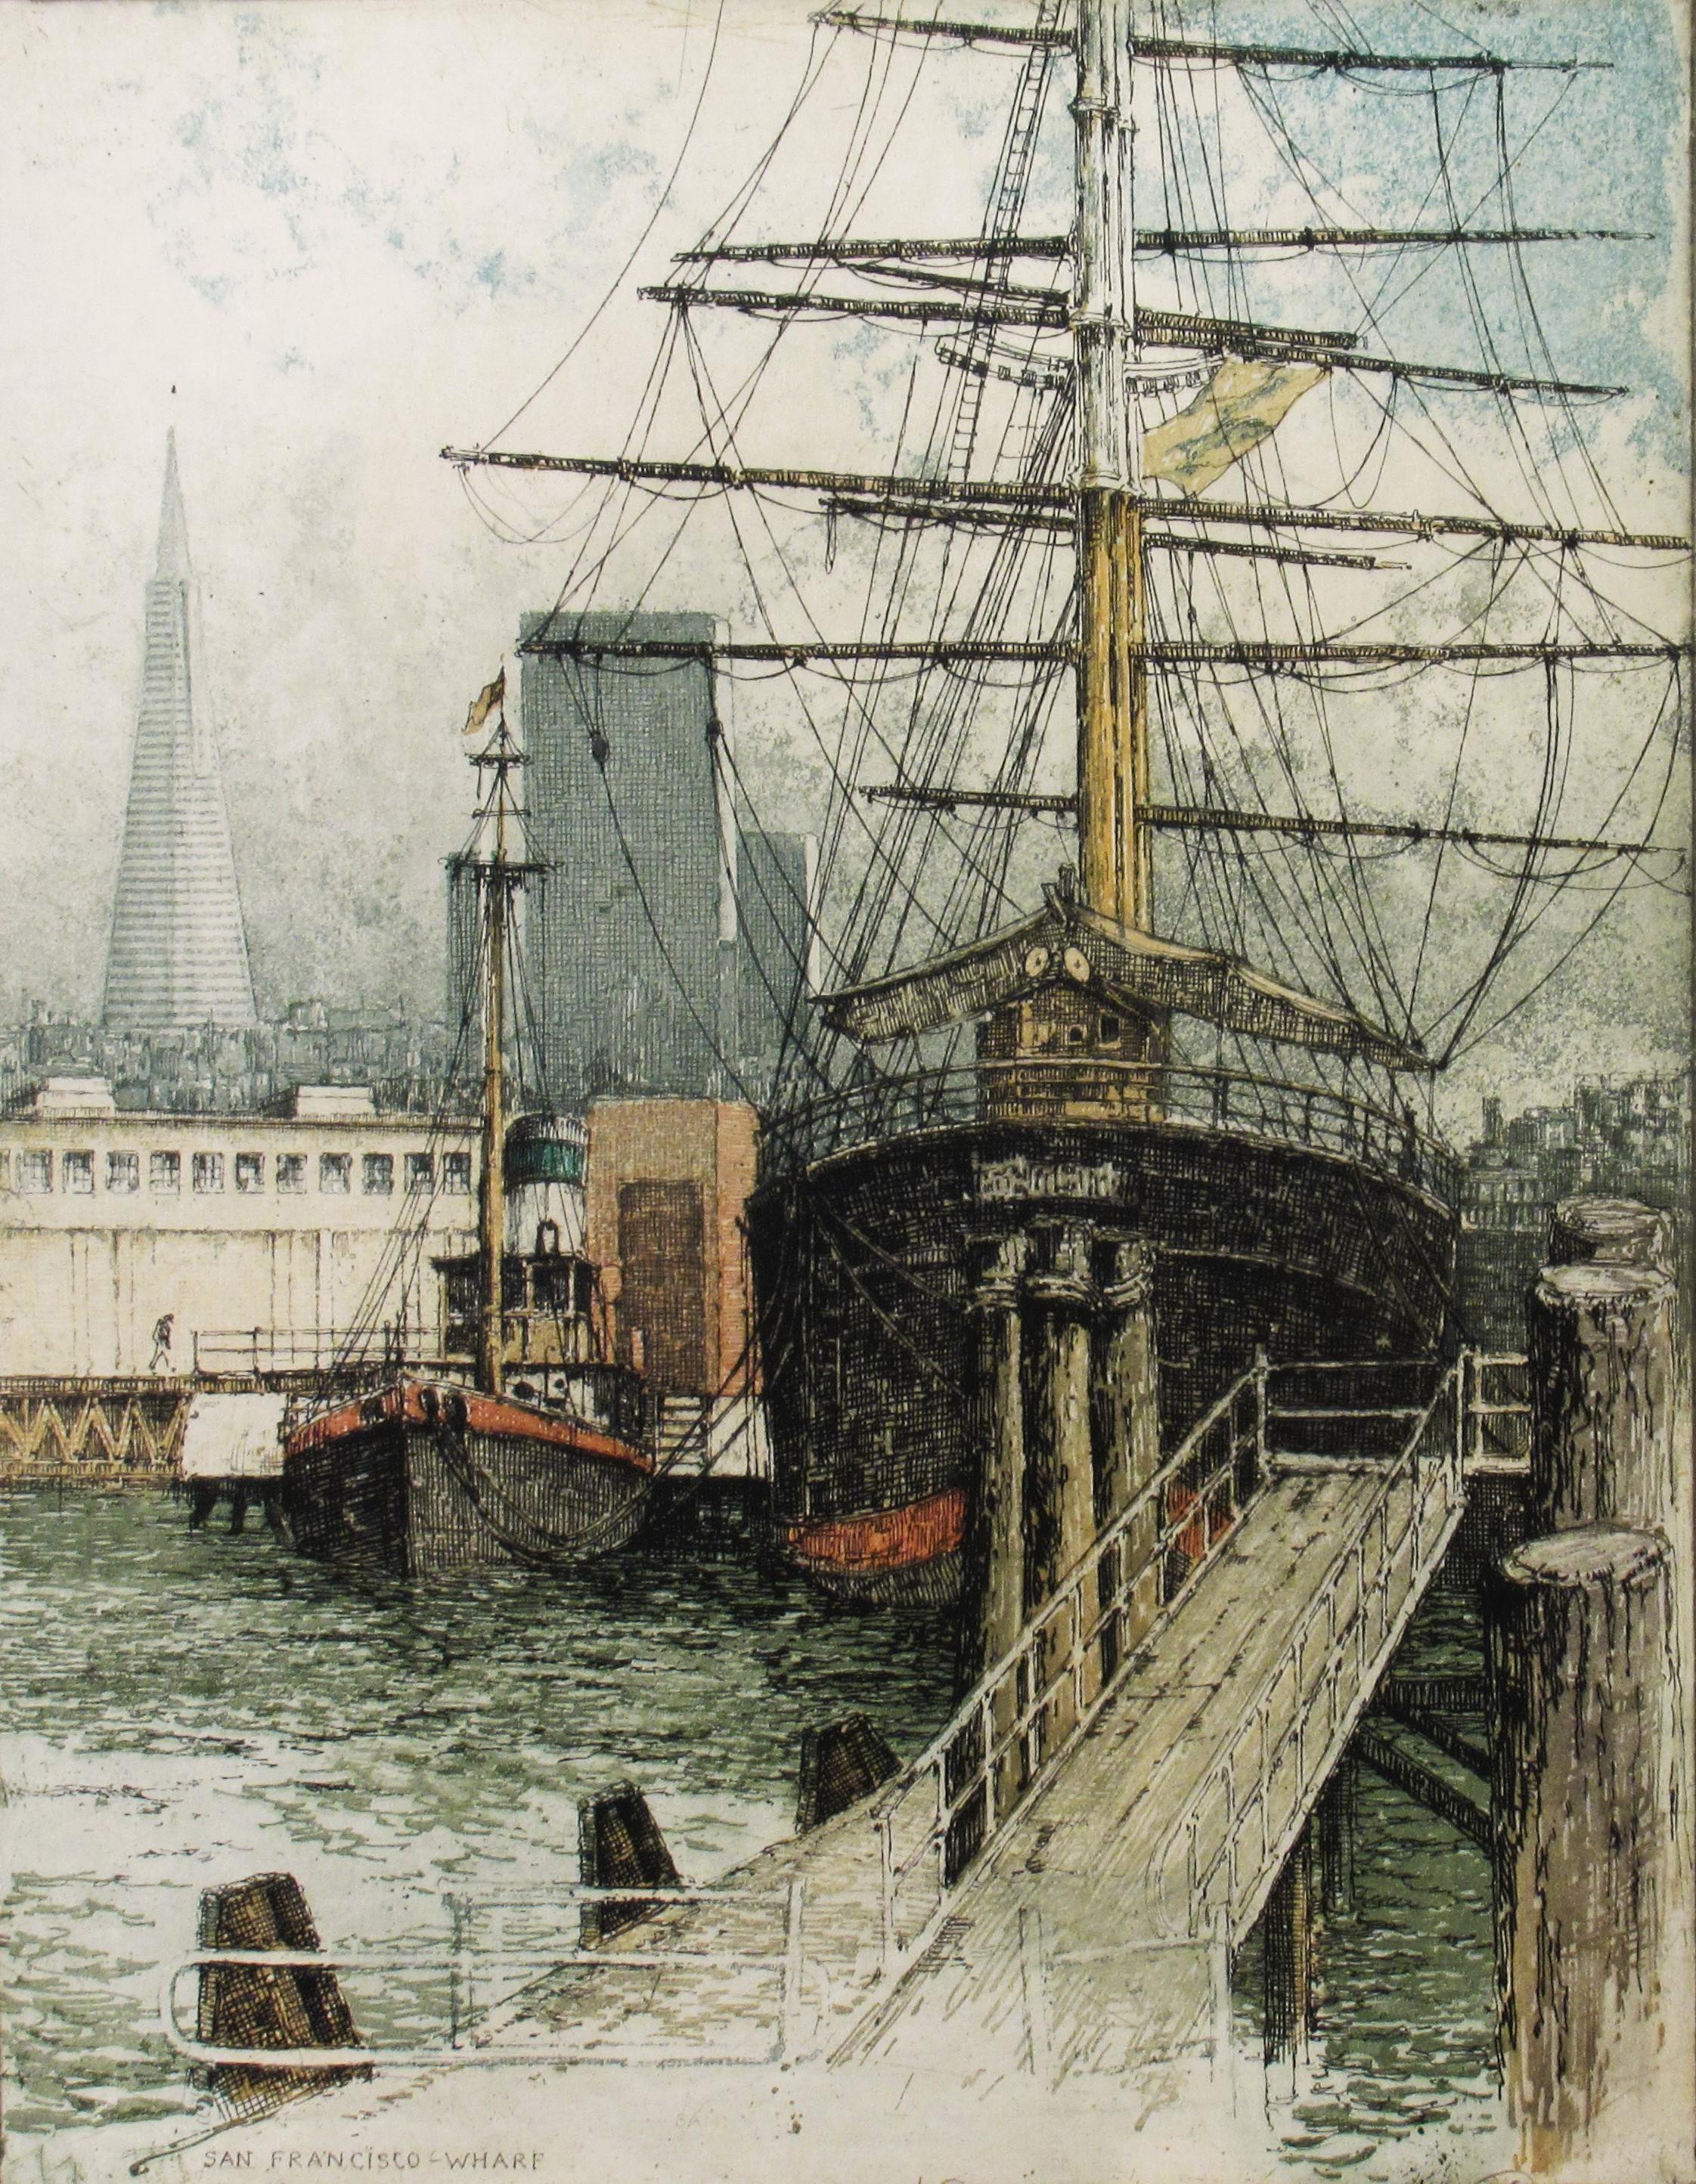 San Francisco Wharf - Print by Josef Eidenberger